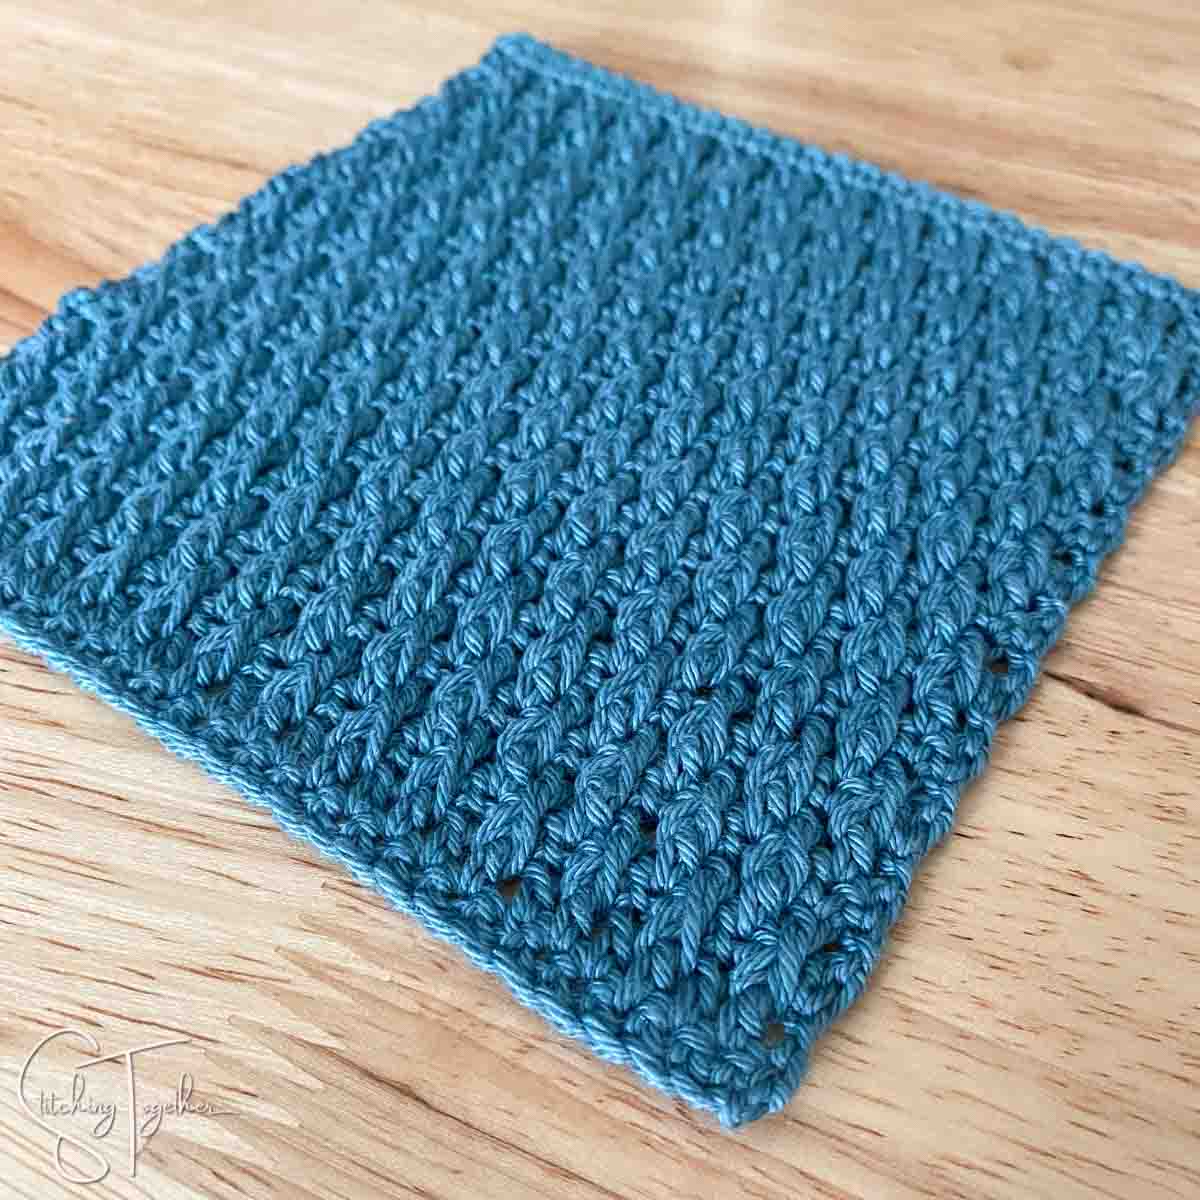 crochet swatch of the alpine stitch from the bottom corner